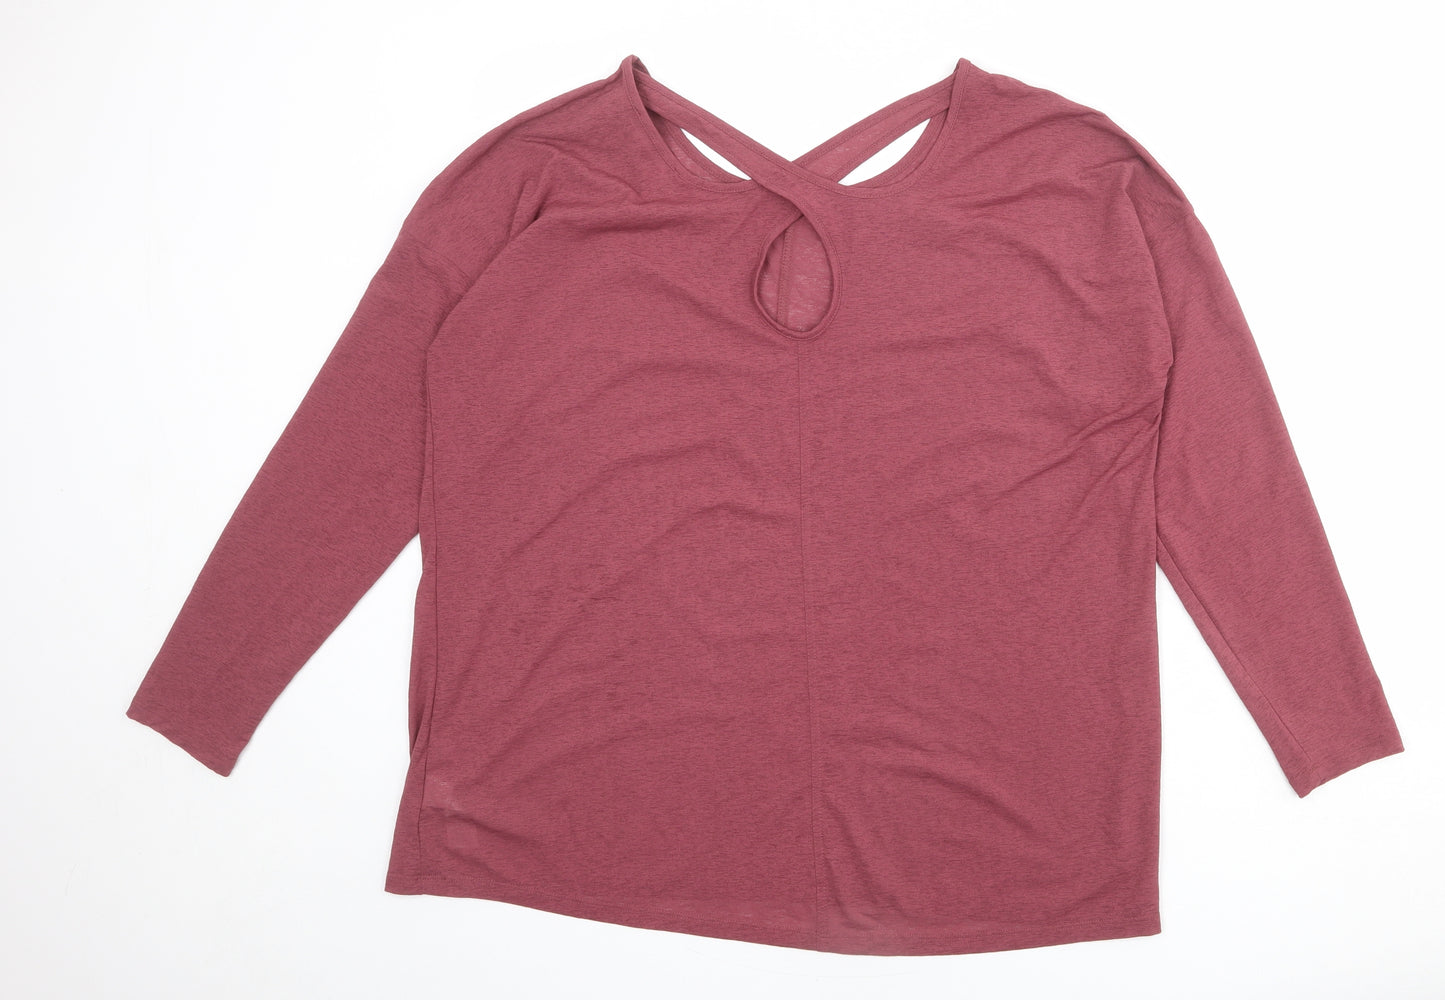 NEXT Womens Pink Polyester Basic T-Shirt Size 18 Round Neck